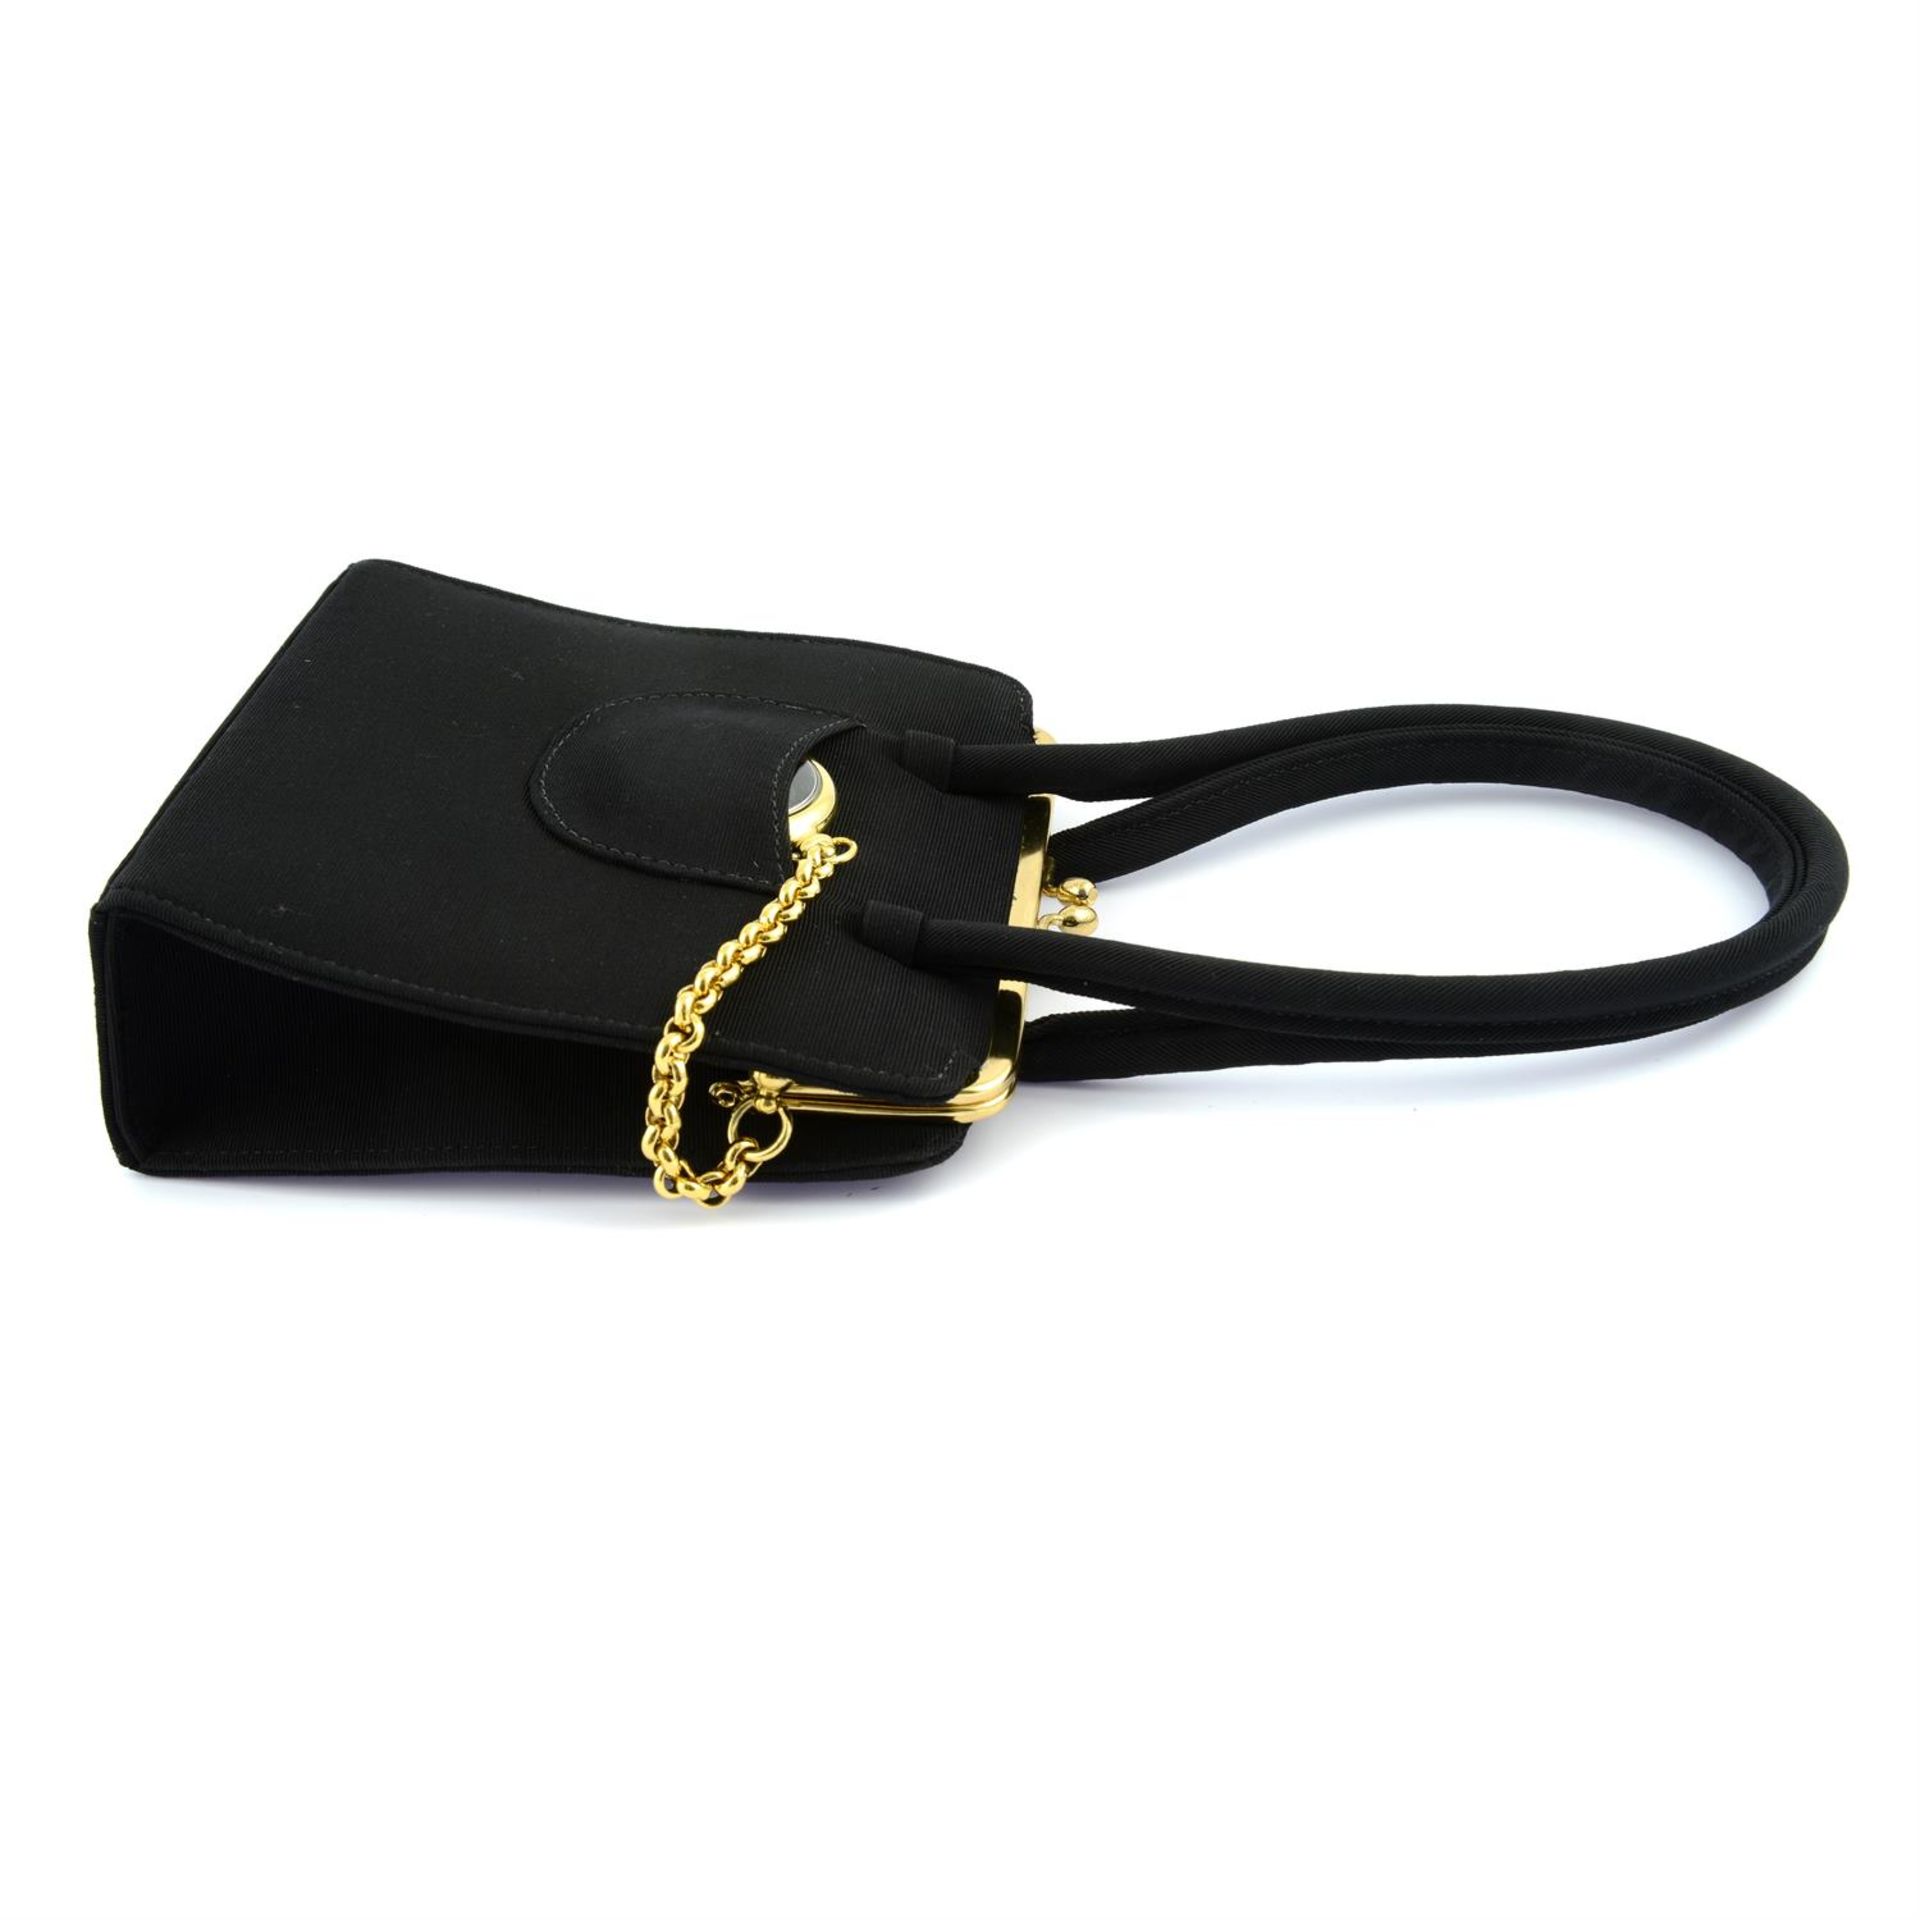 ANYA HINDMARCH - a black fabric handbag. - Bild 3 aus 6